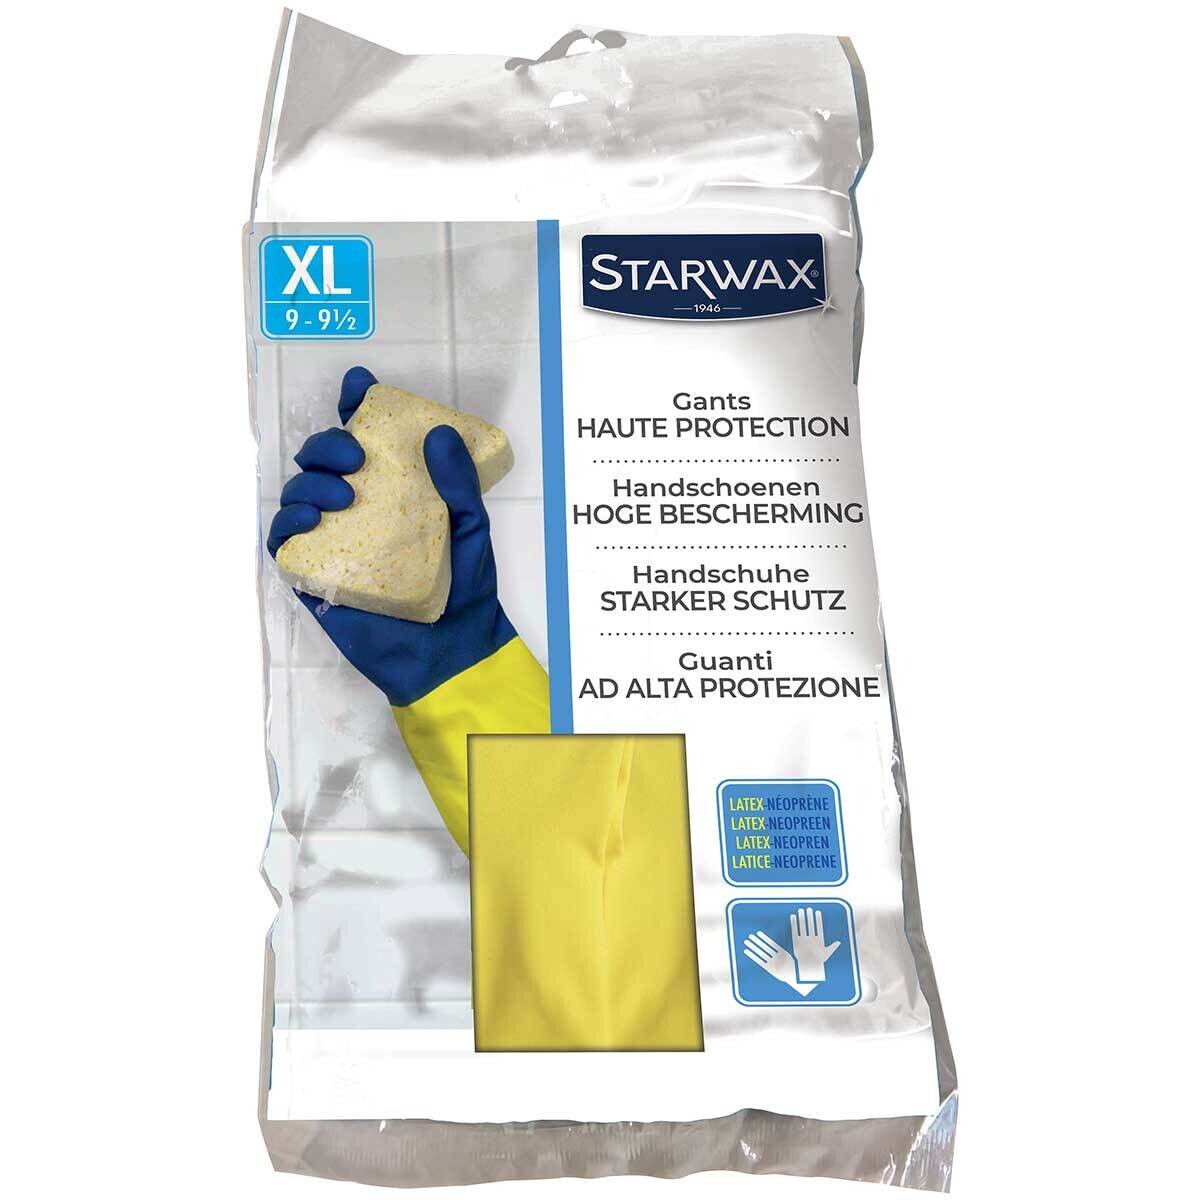 Starwax gants de ménage haute protection 'xl" - 1 pair